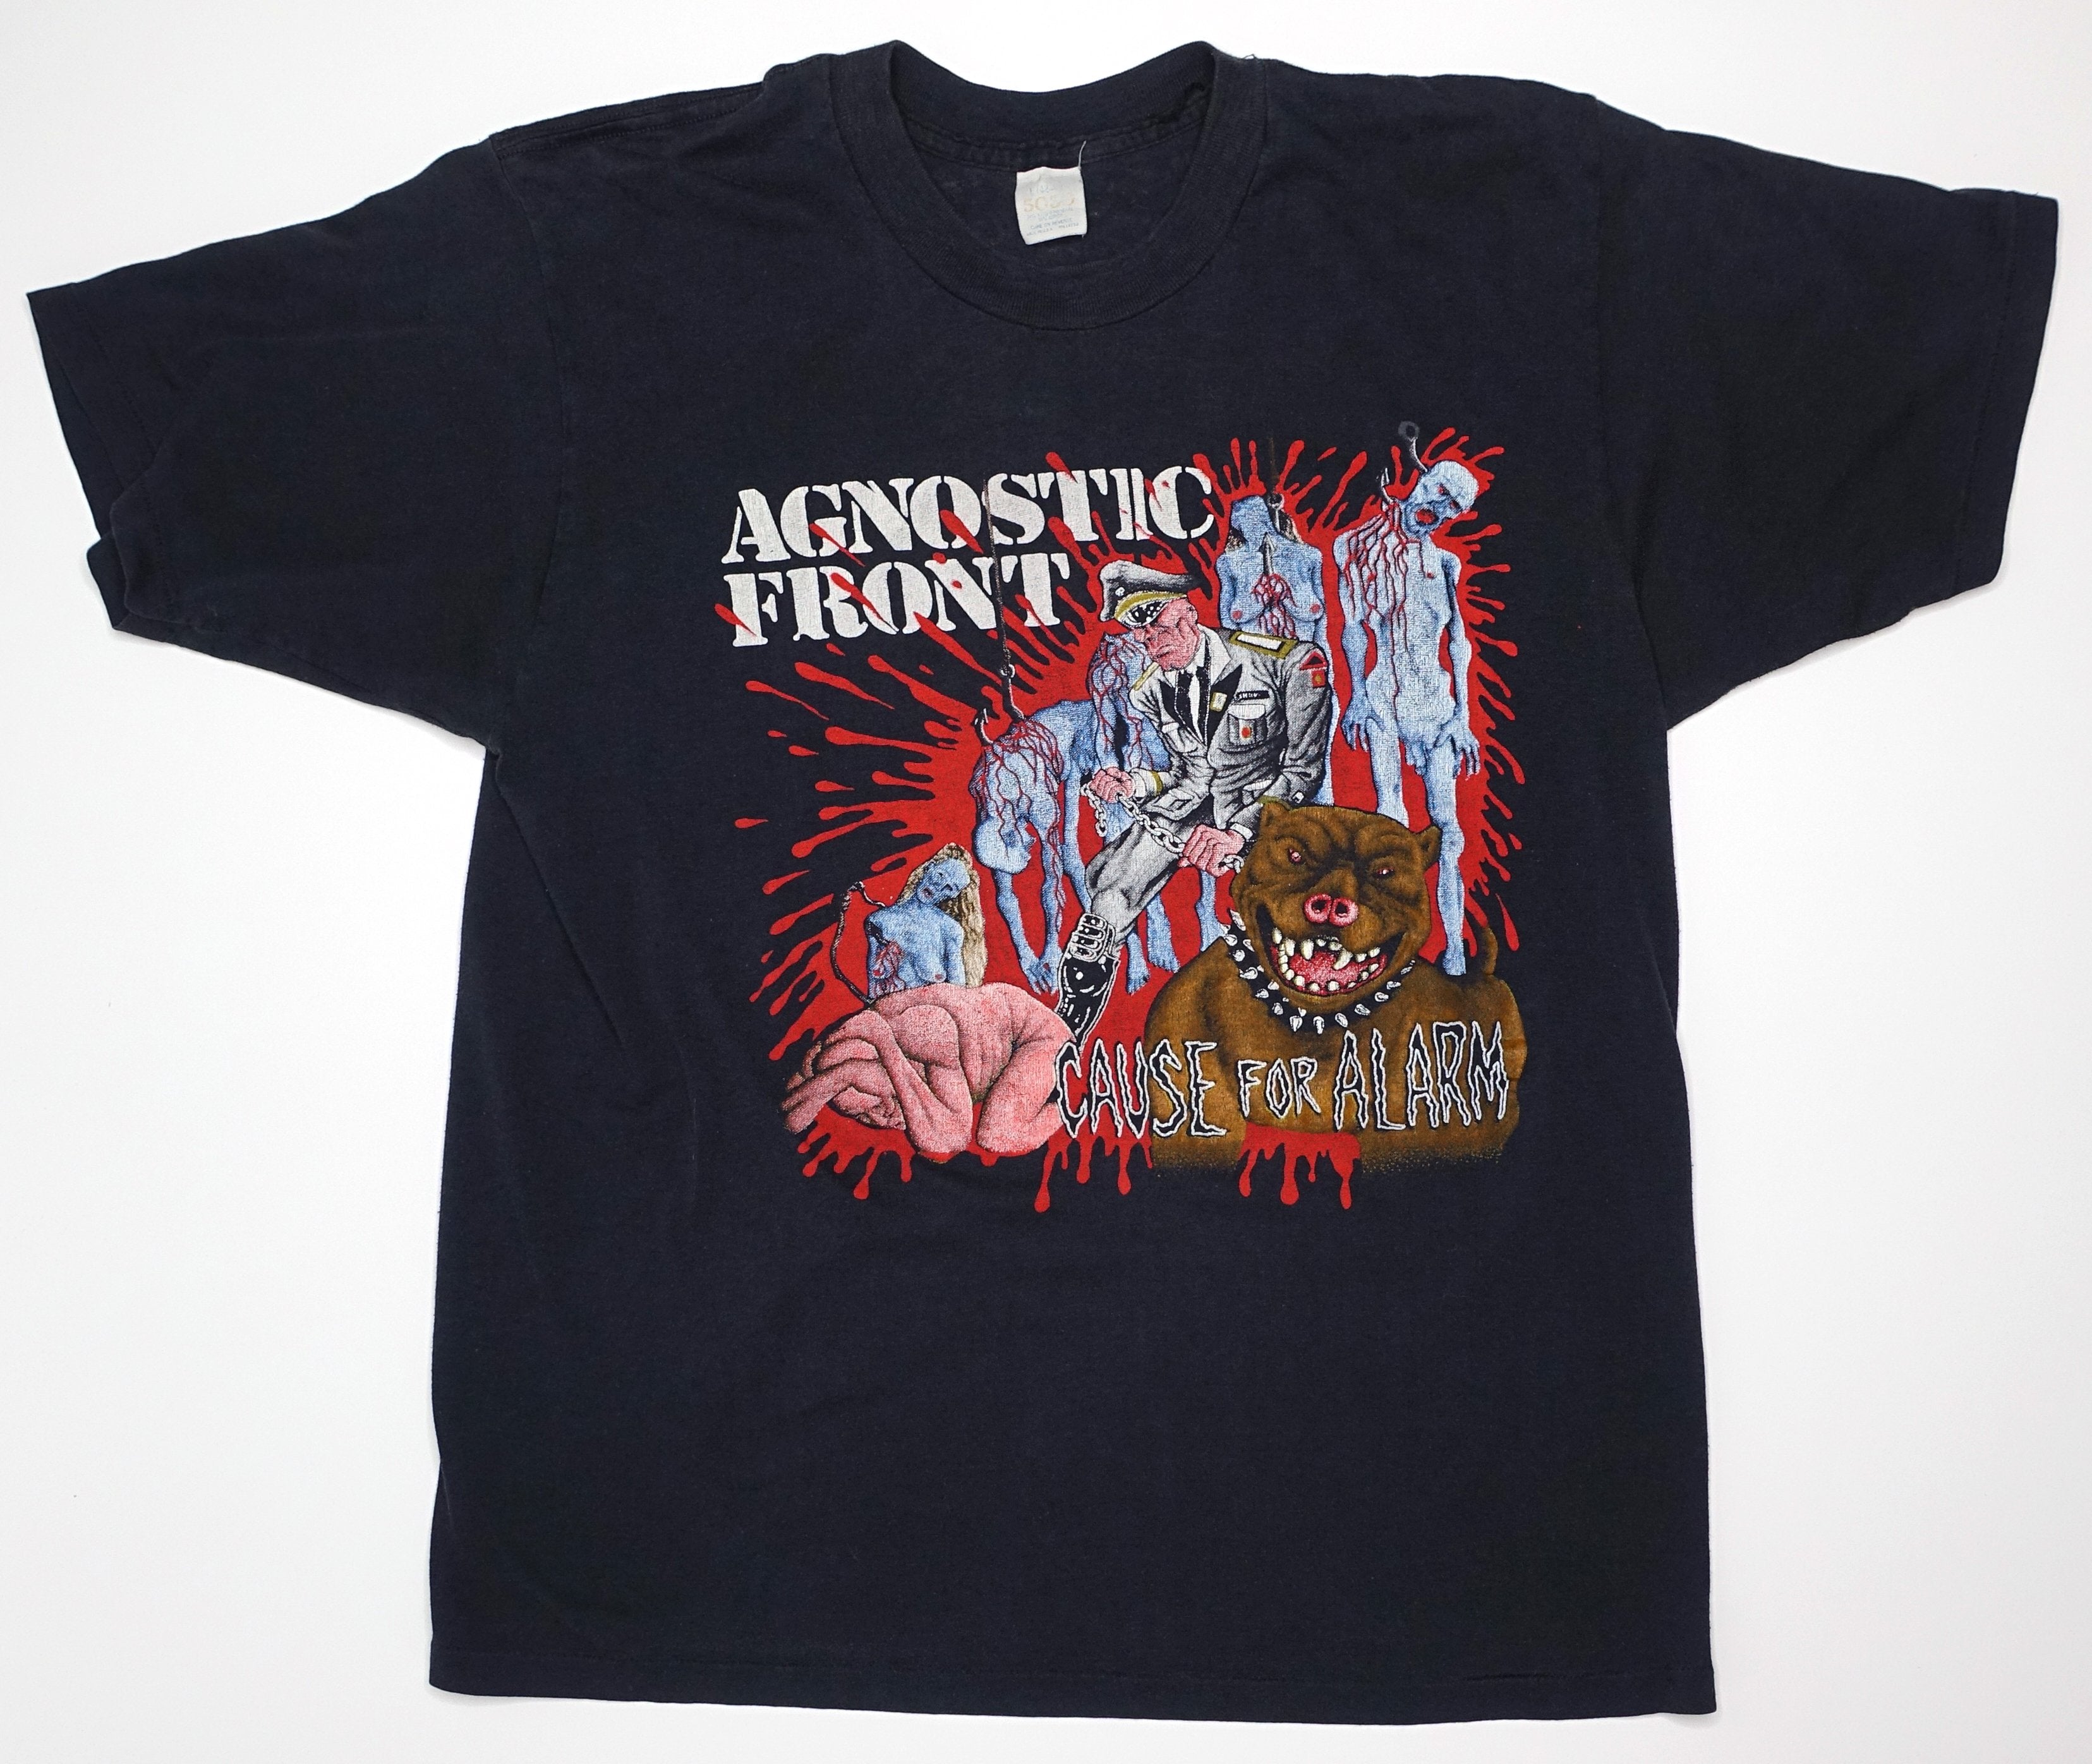 Agnostic Front - Cause For Alarm / Eliminator 1986 Tour Shirt Size Large